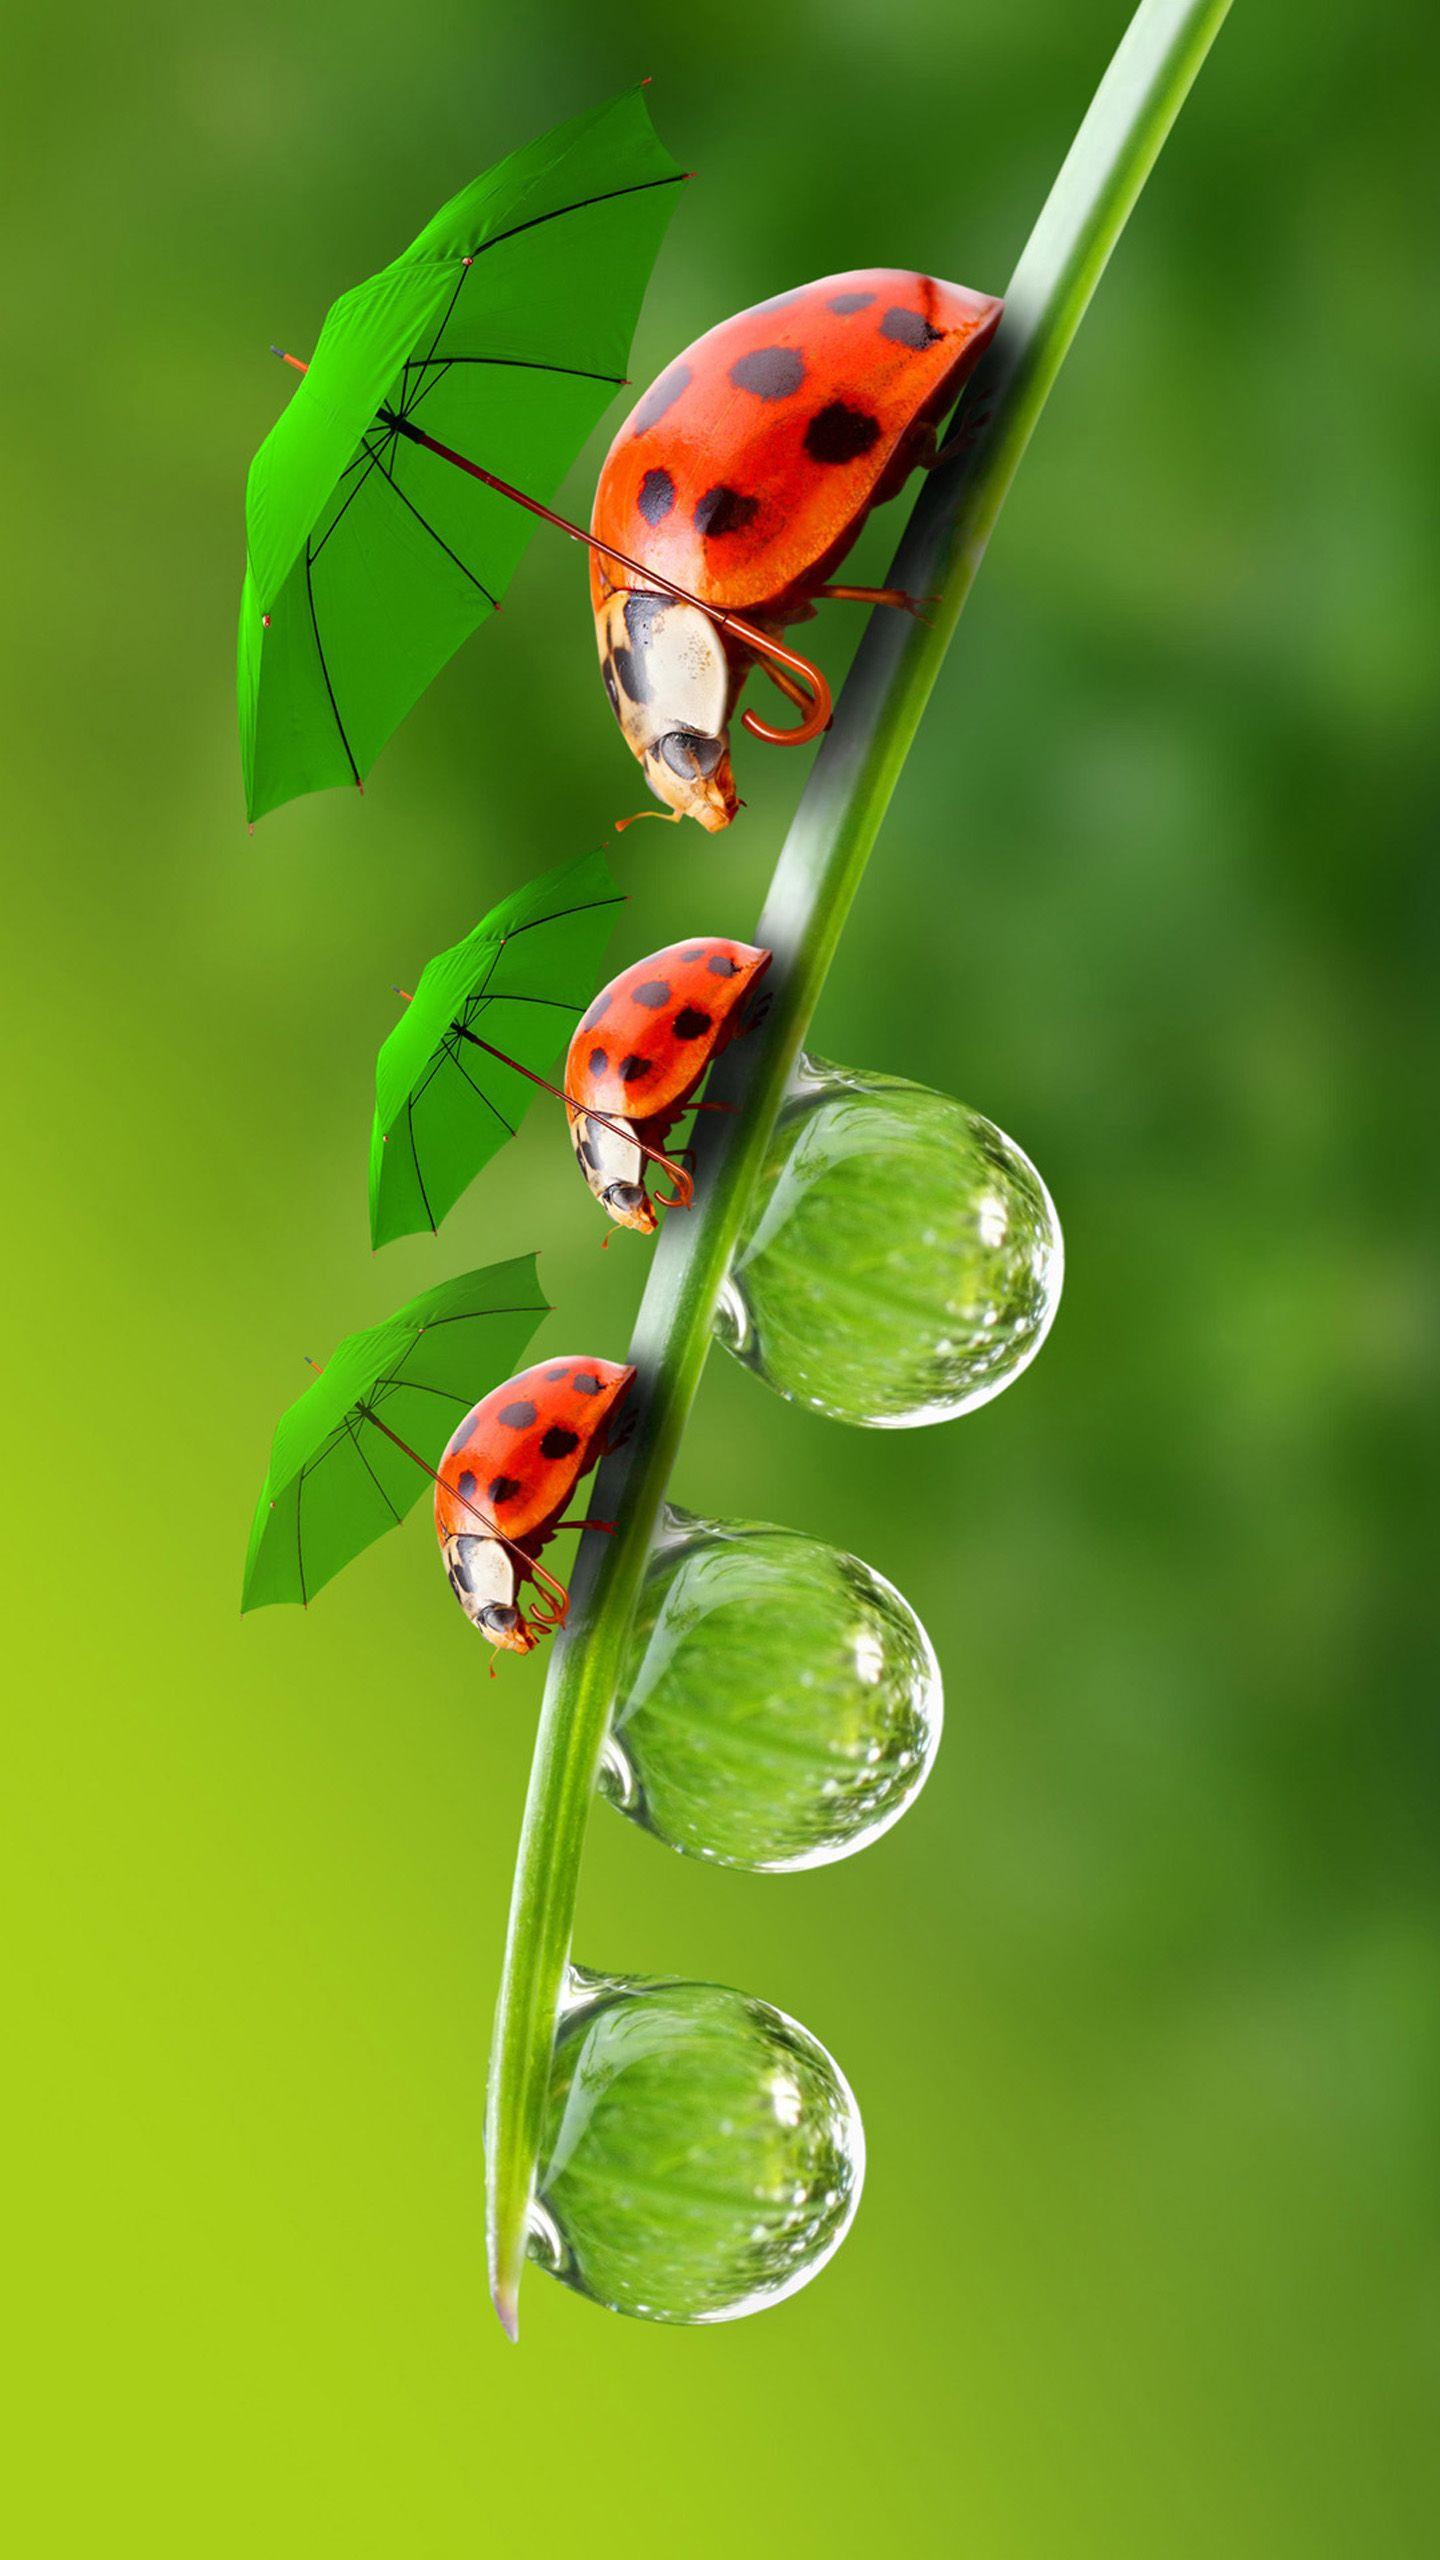 Ladybug Wallpaper, Widescreen Wallpaper Of Ladybug, WP KB 383 W.Web